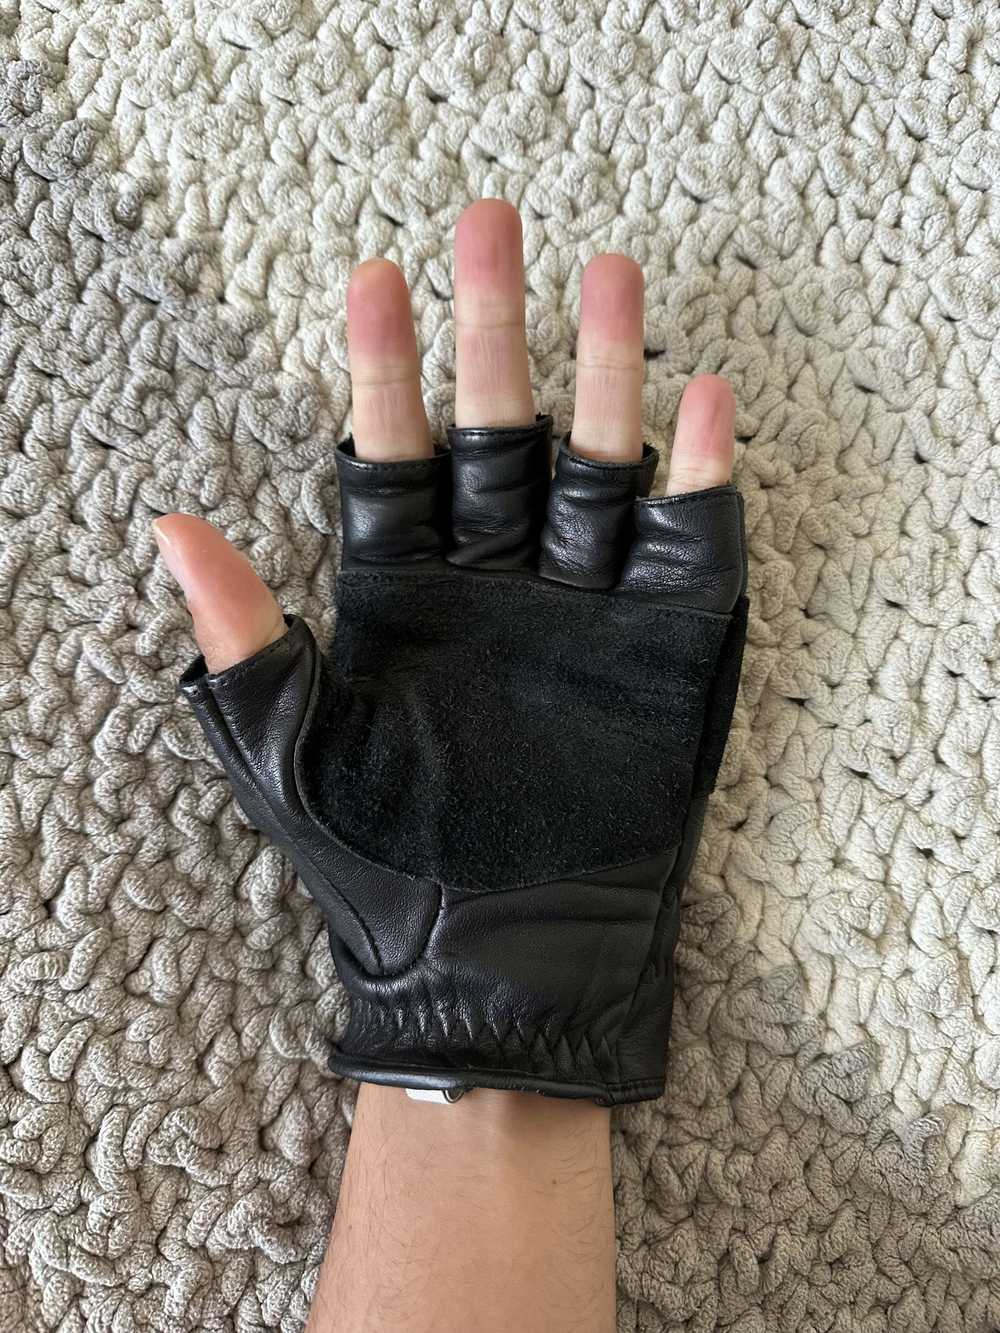 Nonnative (Grip Swany) G-11 Glove - image 6